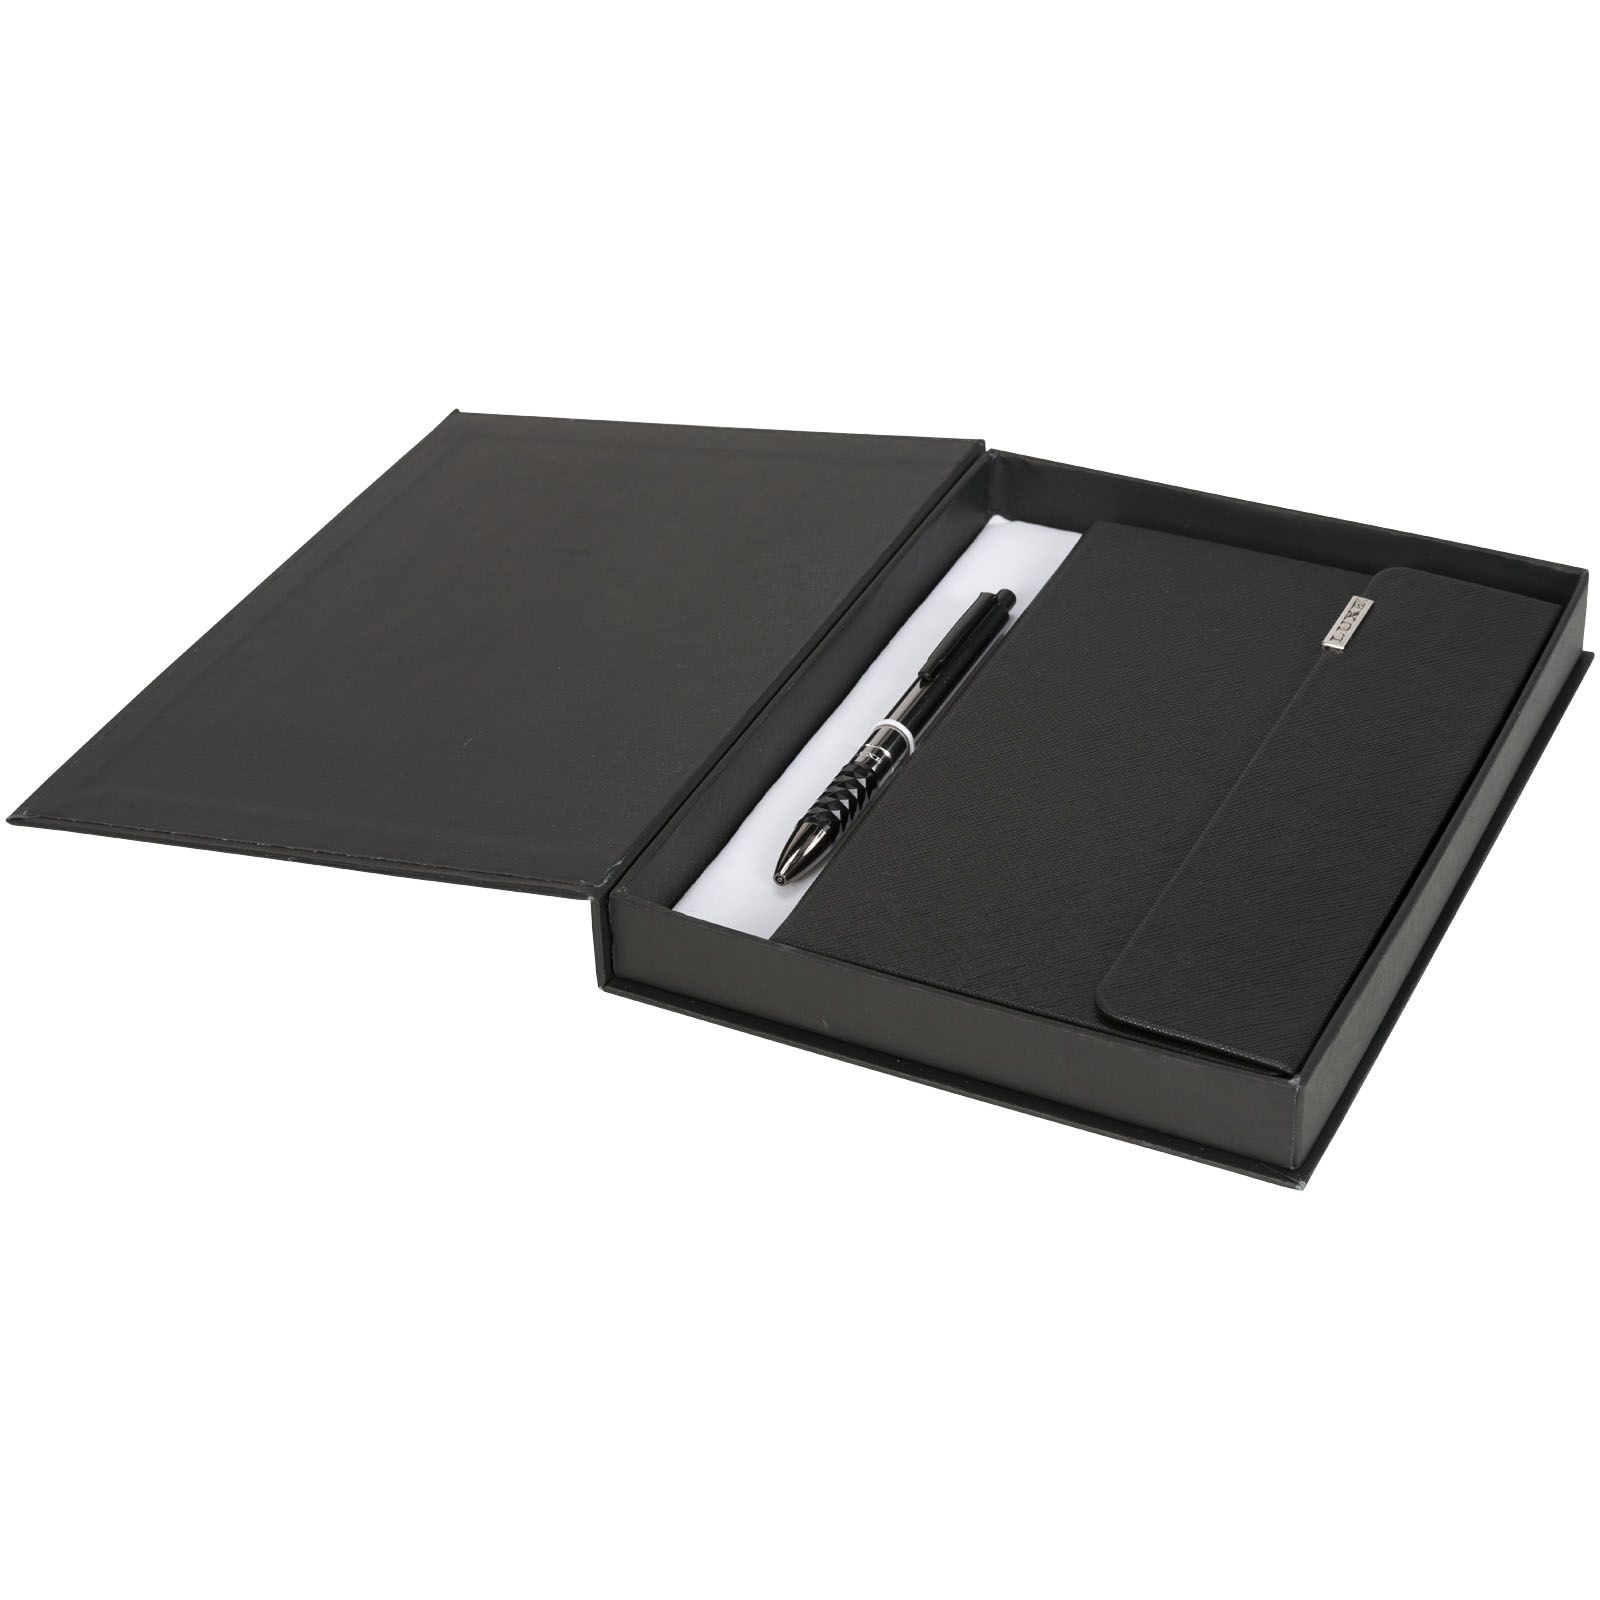 Pens & Writing - Tactical notebook gift set